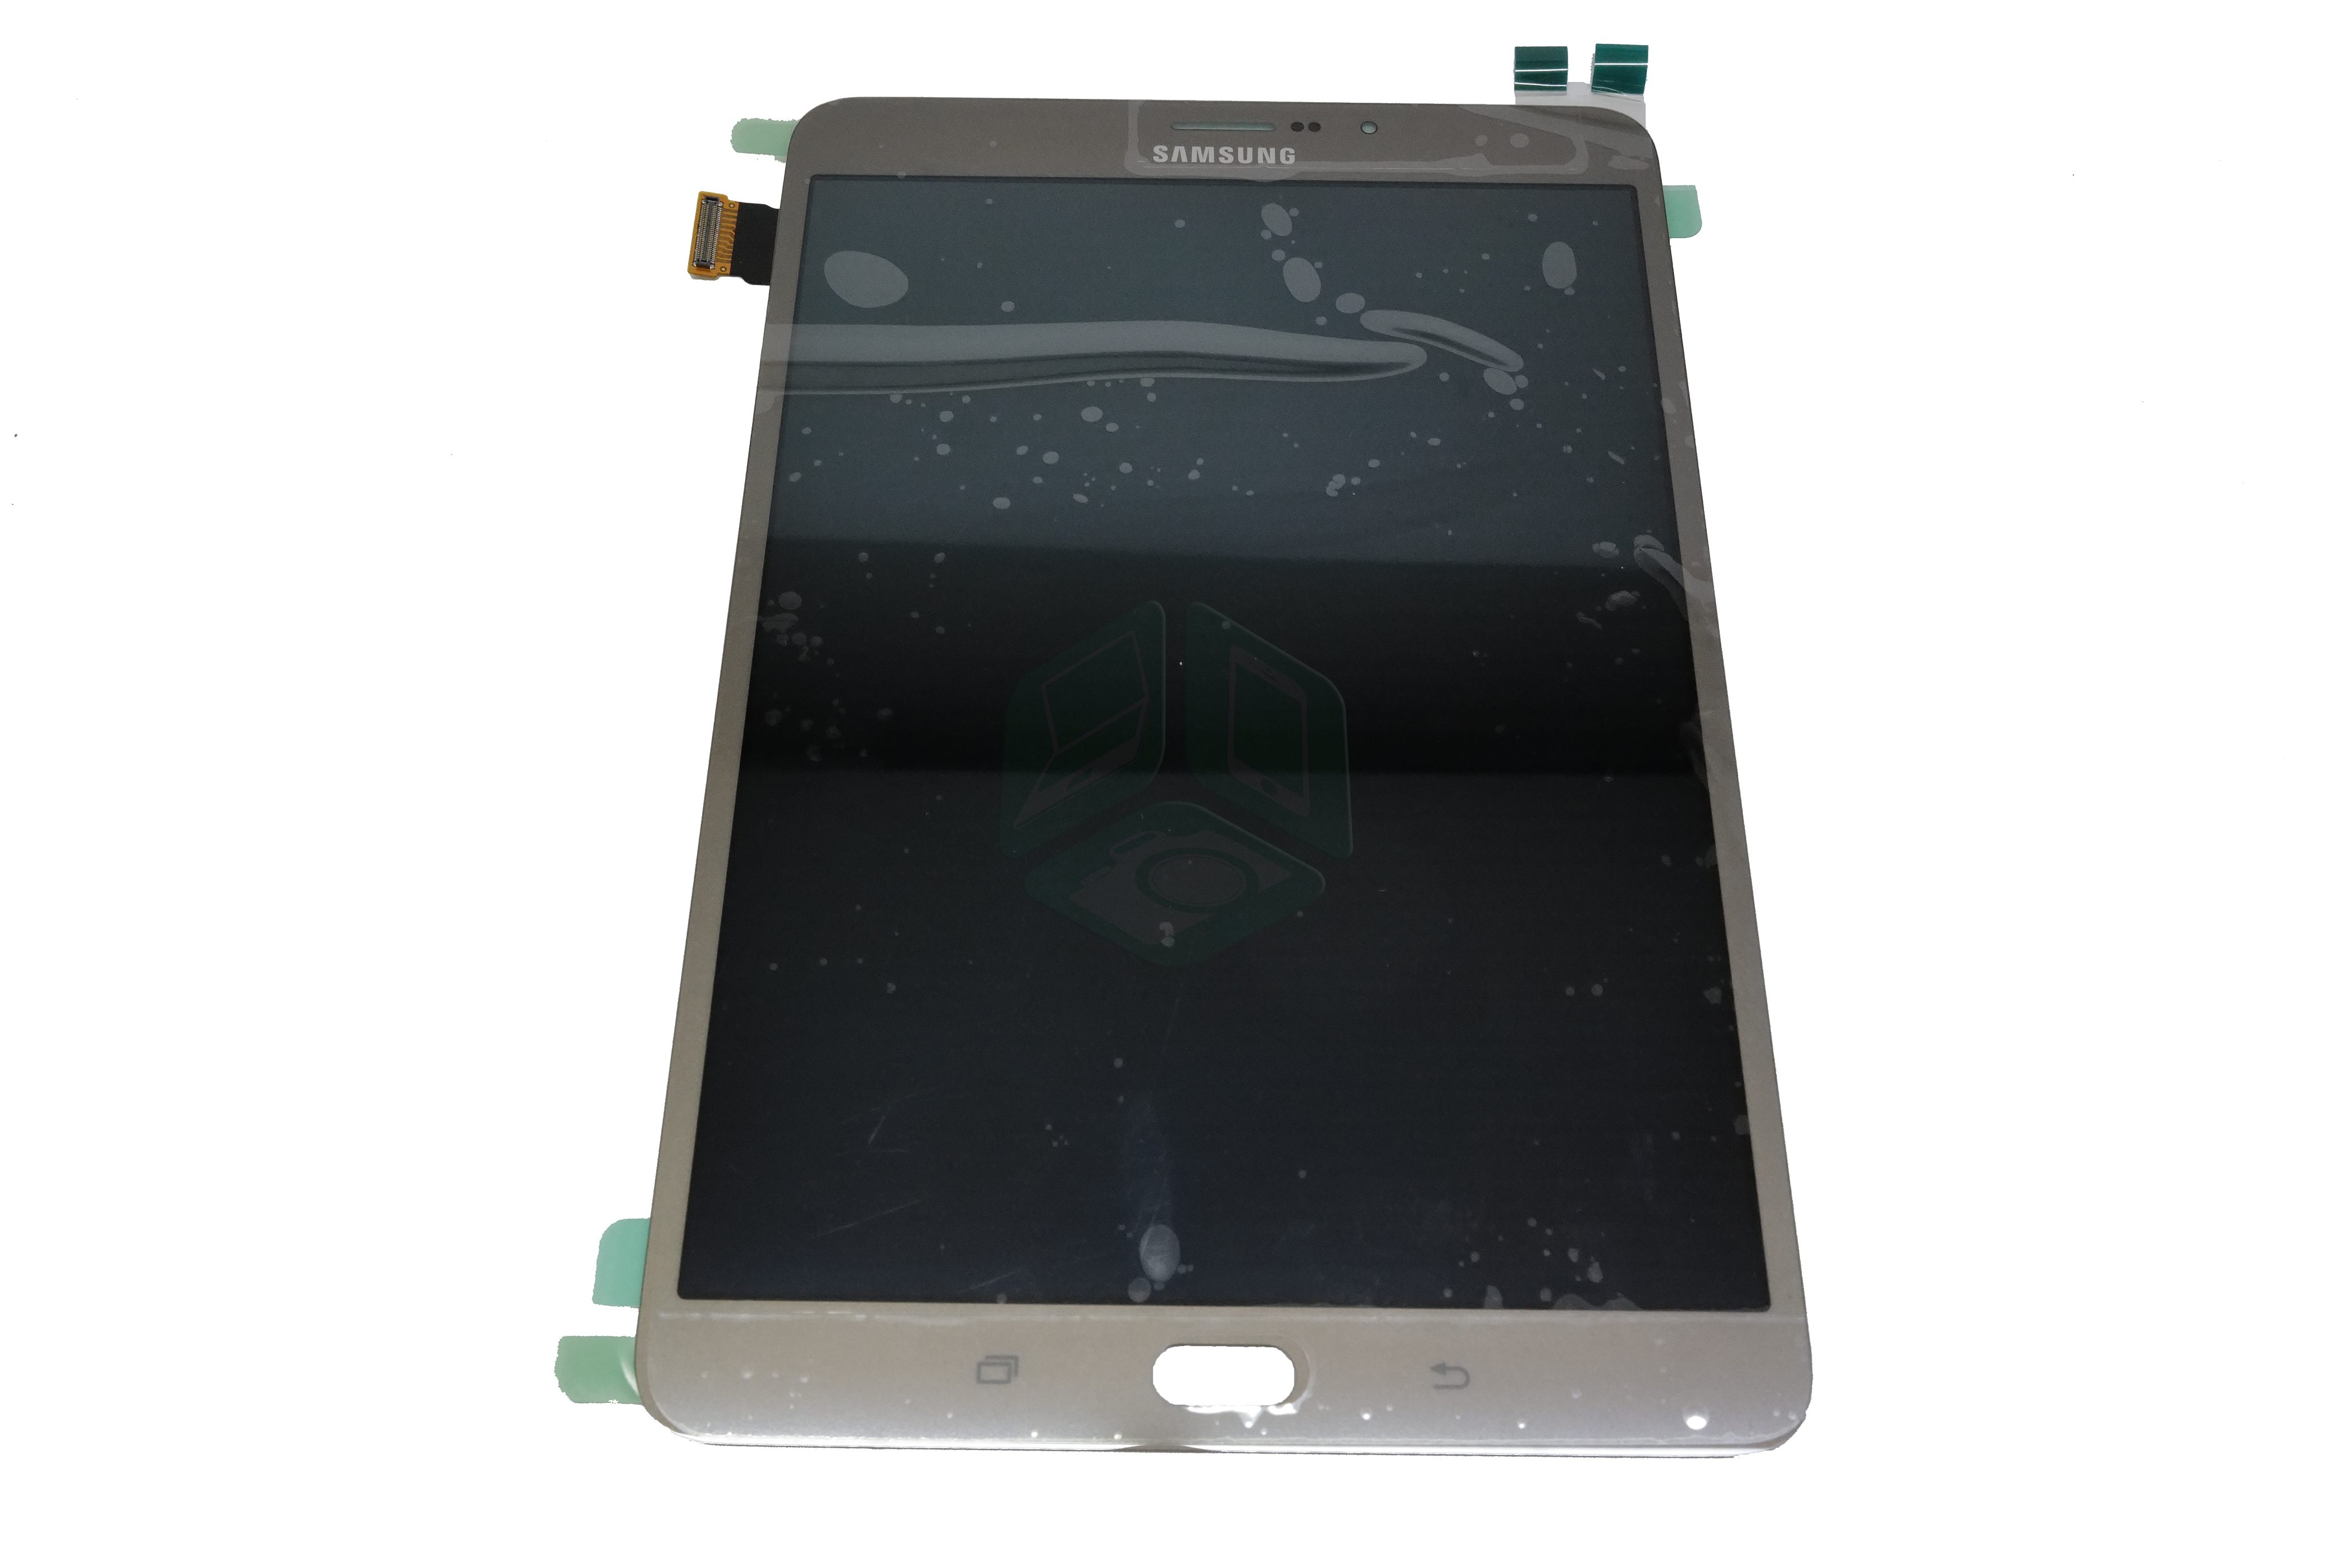 Samsung Galaxy Tab S2 8.0 LTE (SM-T715)  gold